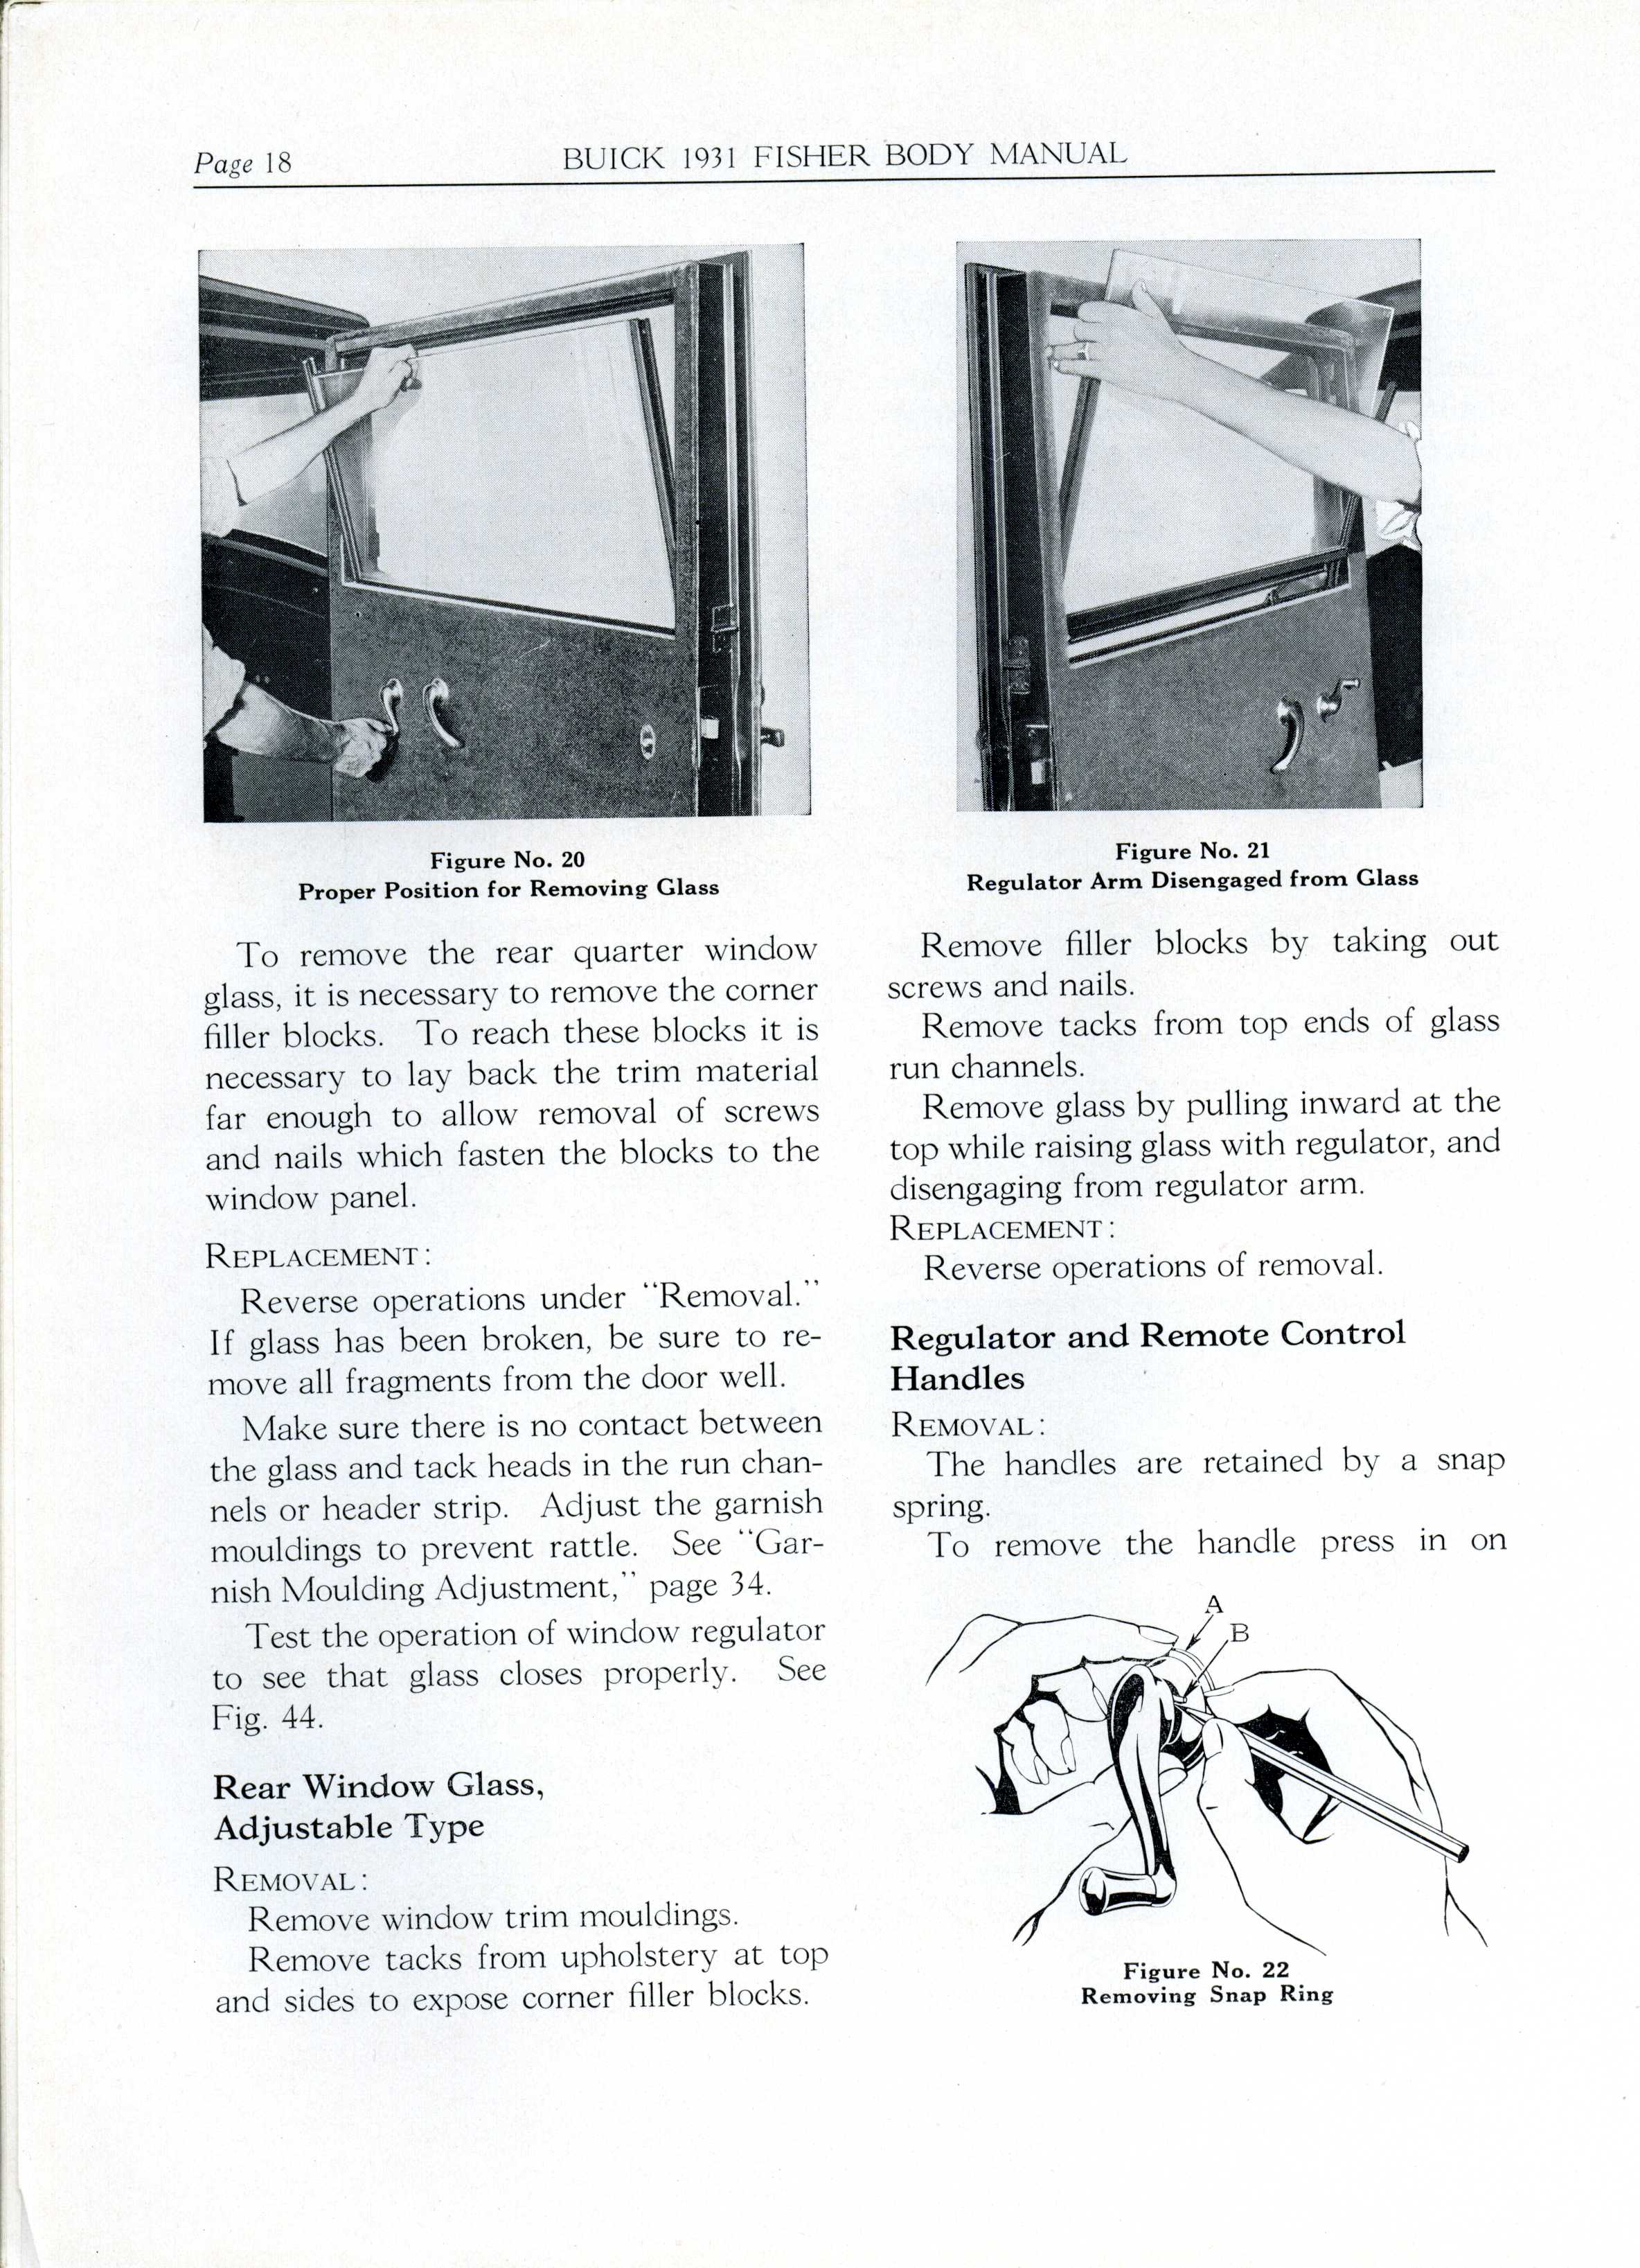 1931 Buick Fisher Body Manual-18